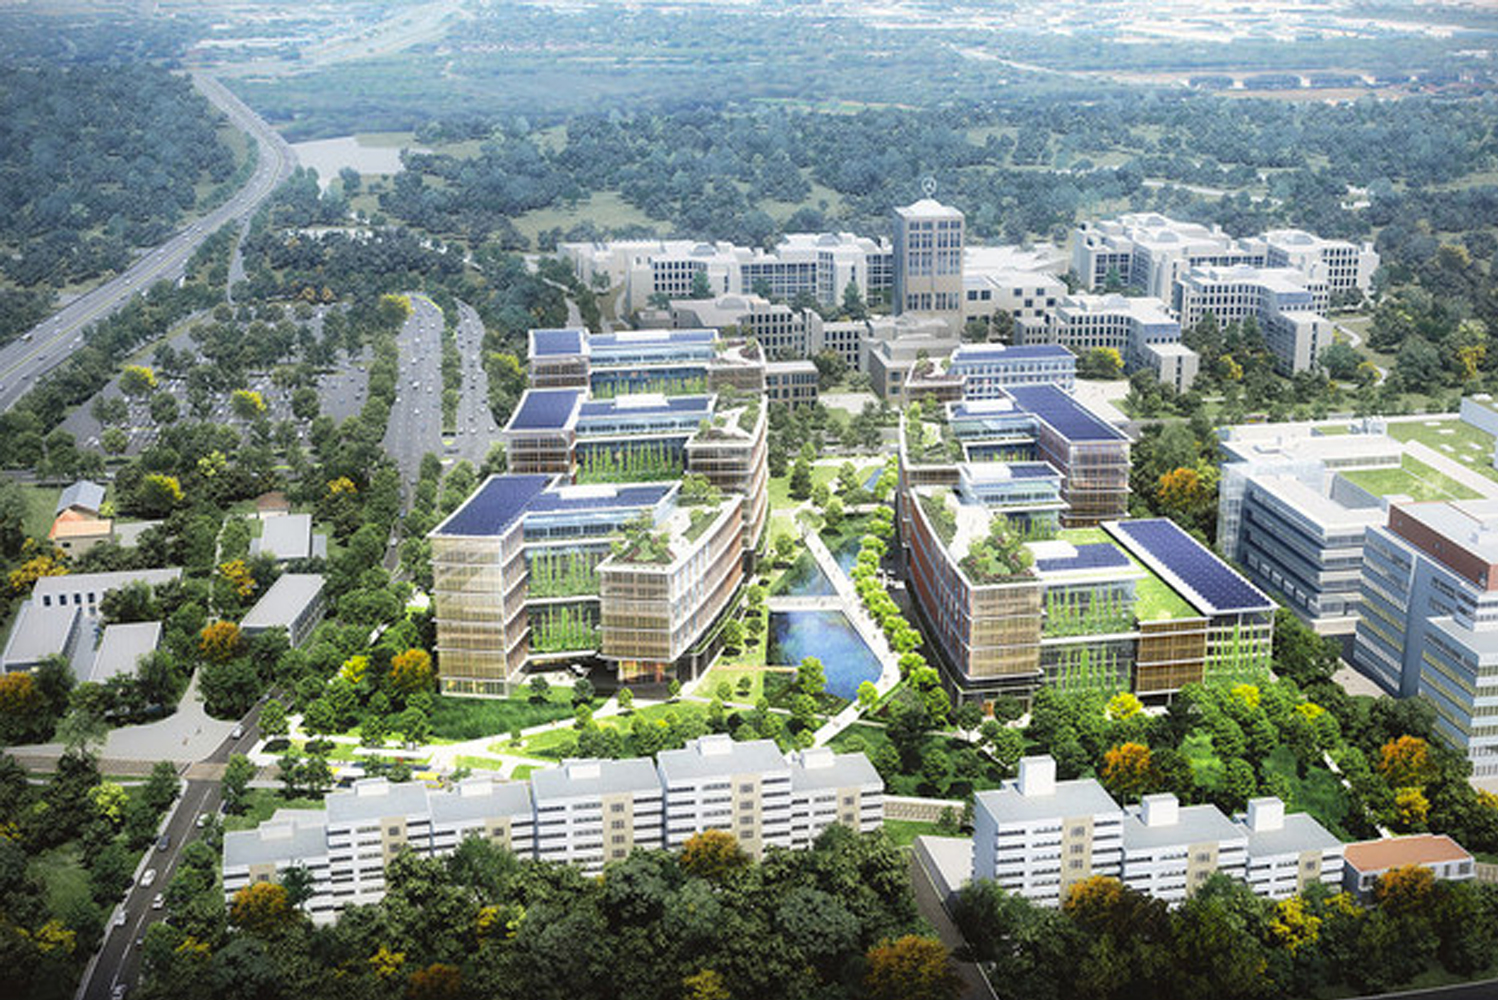 Pickard Chilton to master plan design urban development in Stuttgart Germany